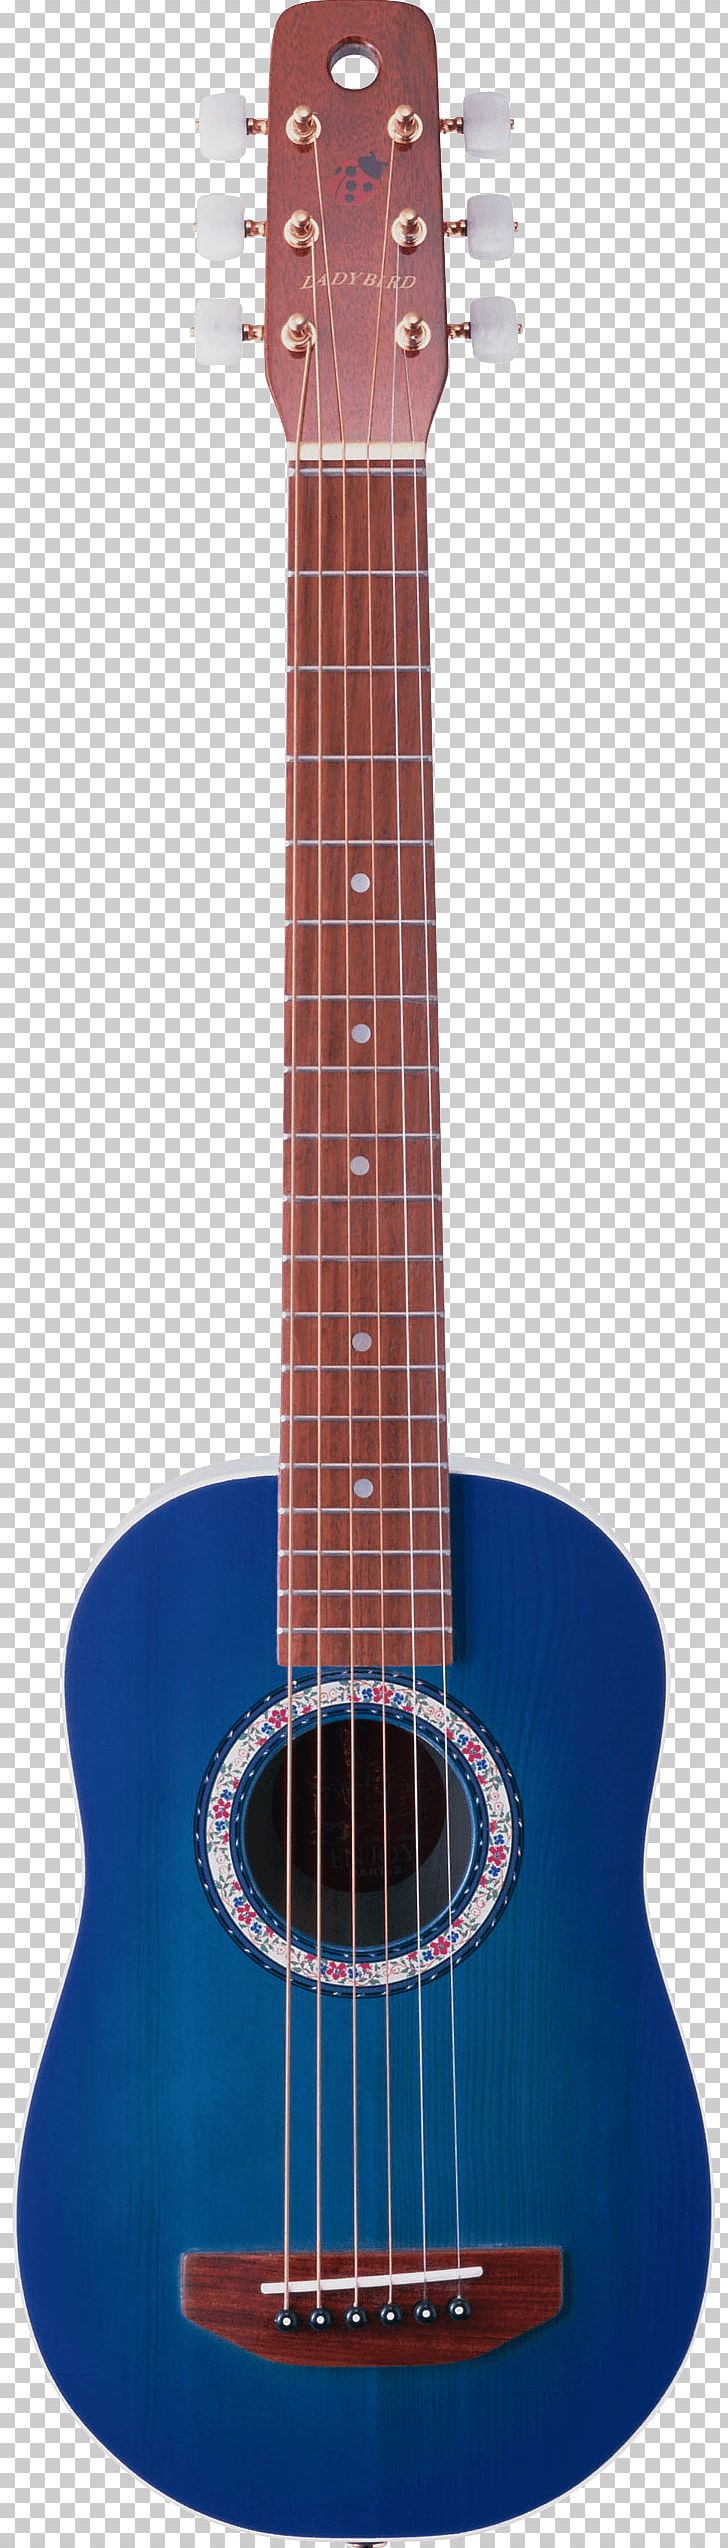 Electric Guitar Gibson Les Paul Musical Instrument Acoustic Guitar PNG, Clipart, Classical Guitar, Cuatro, Glass, Guitar Accessory, Guitarist Free PNG Download